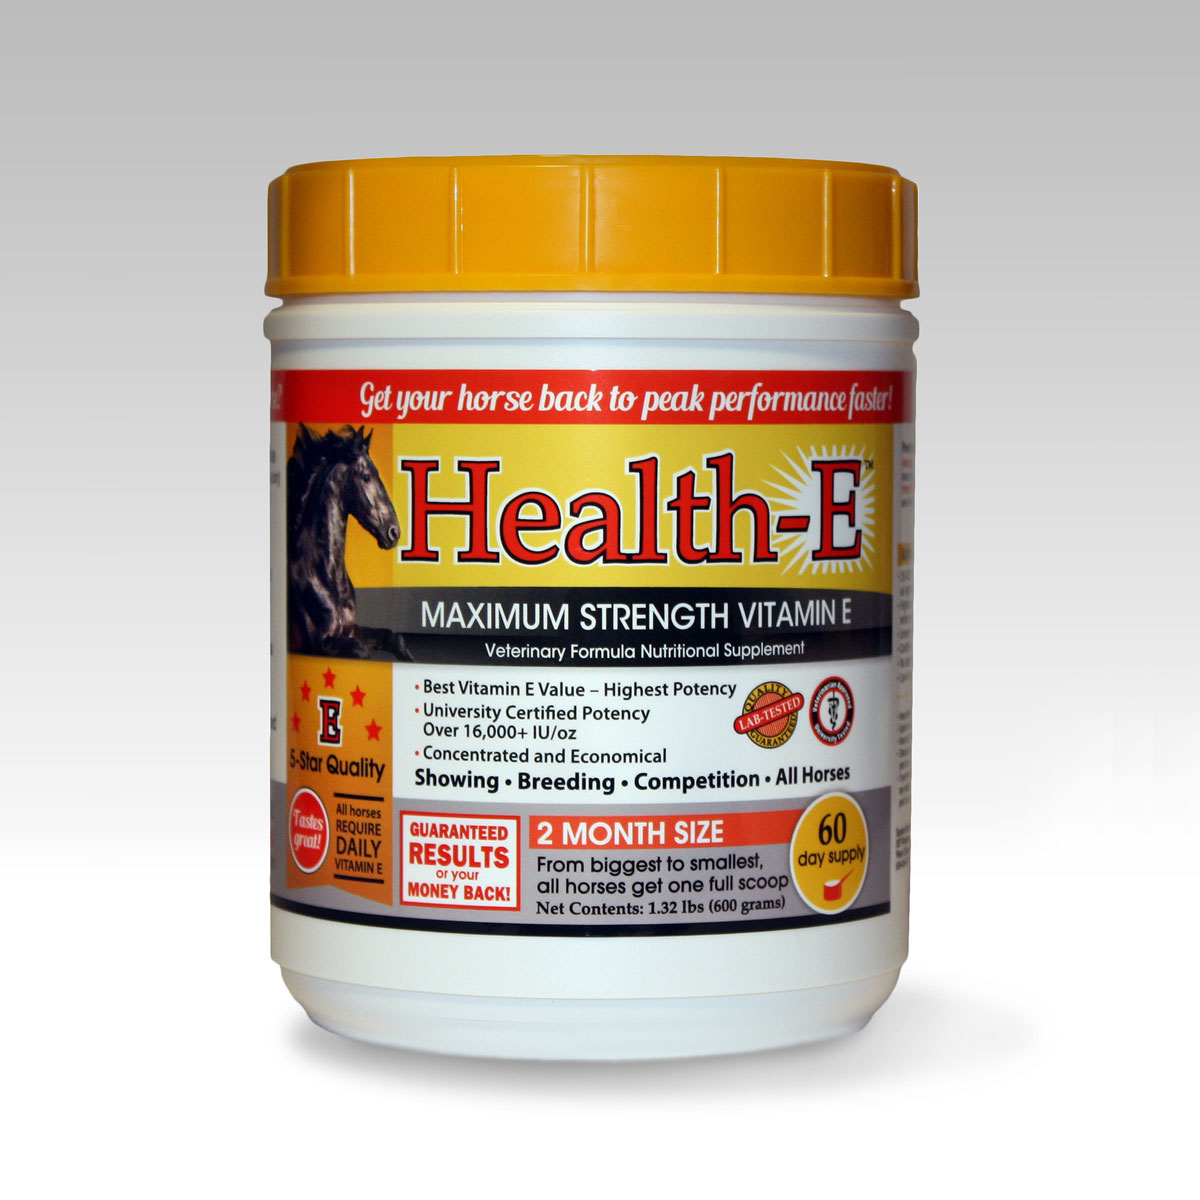 Health-E Vitamin E Supliment for horses